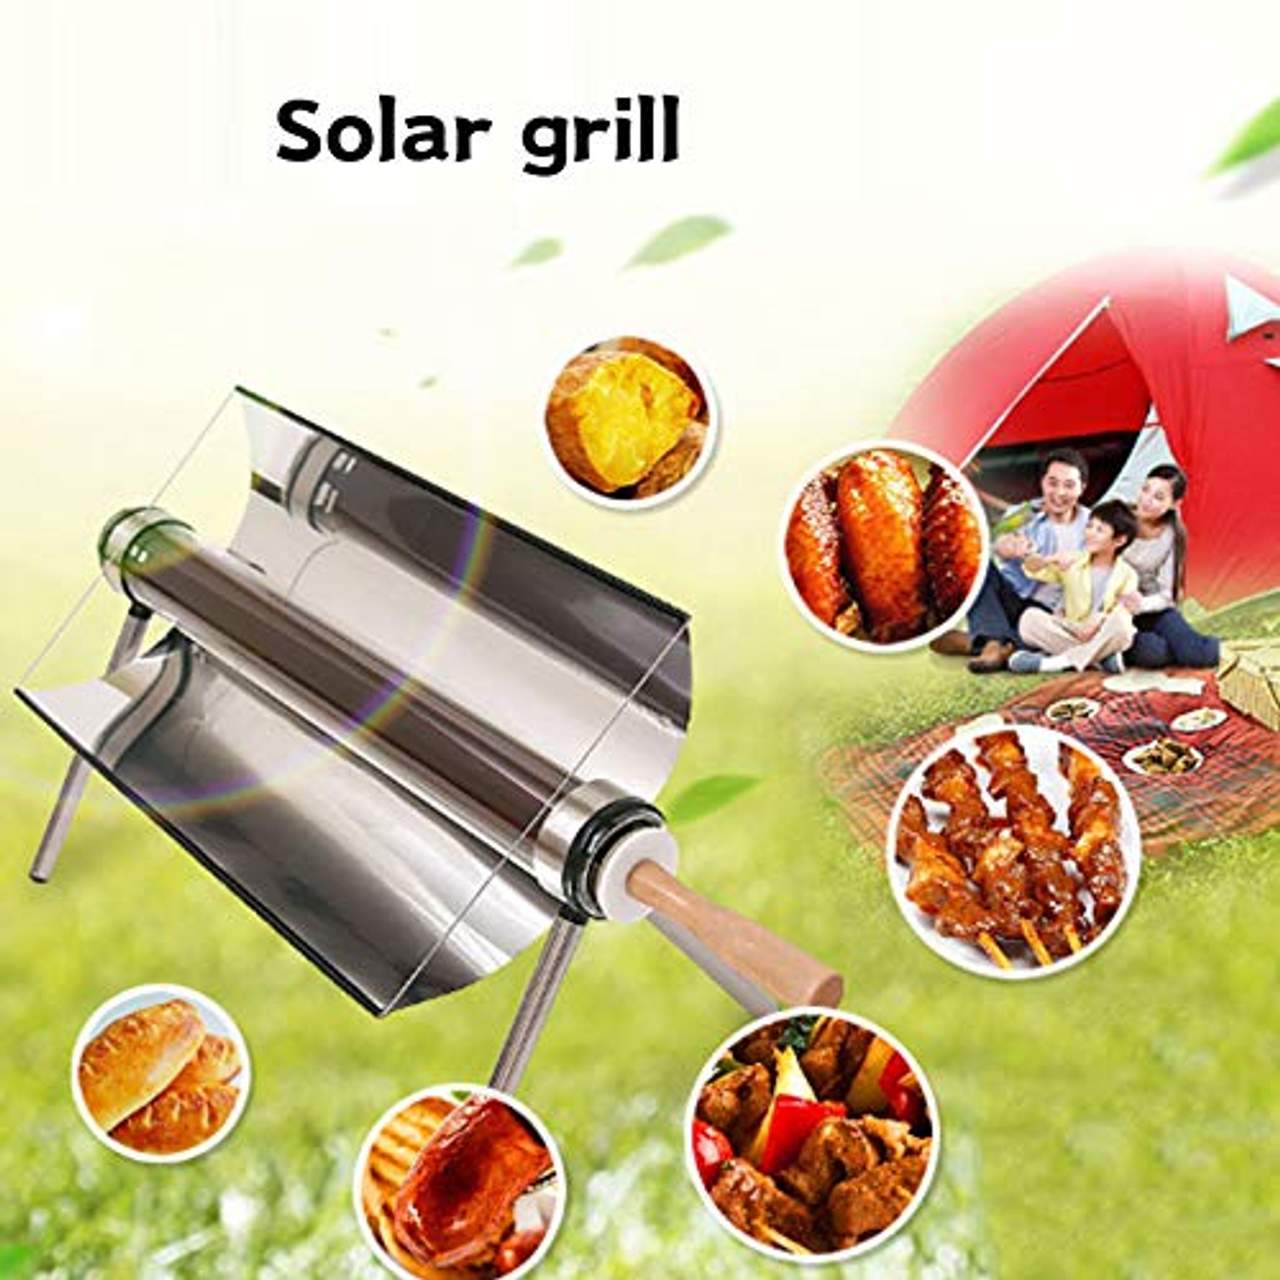 Middle Tragbarer Solargrill Solarkocher,Faltbarer Solargrillkocher aus Edelstahl